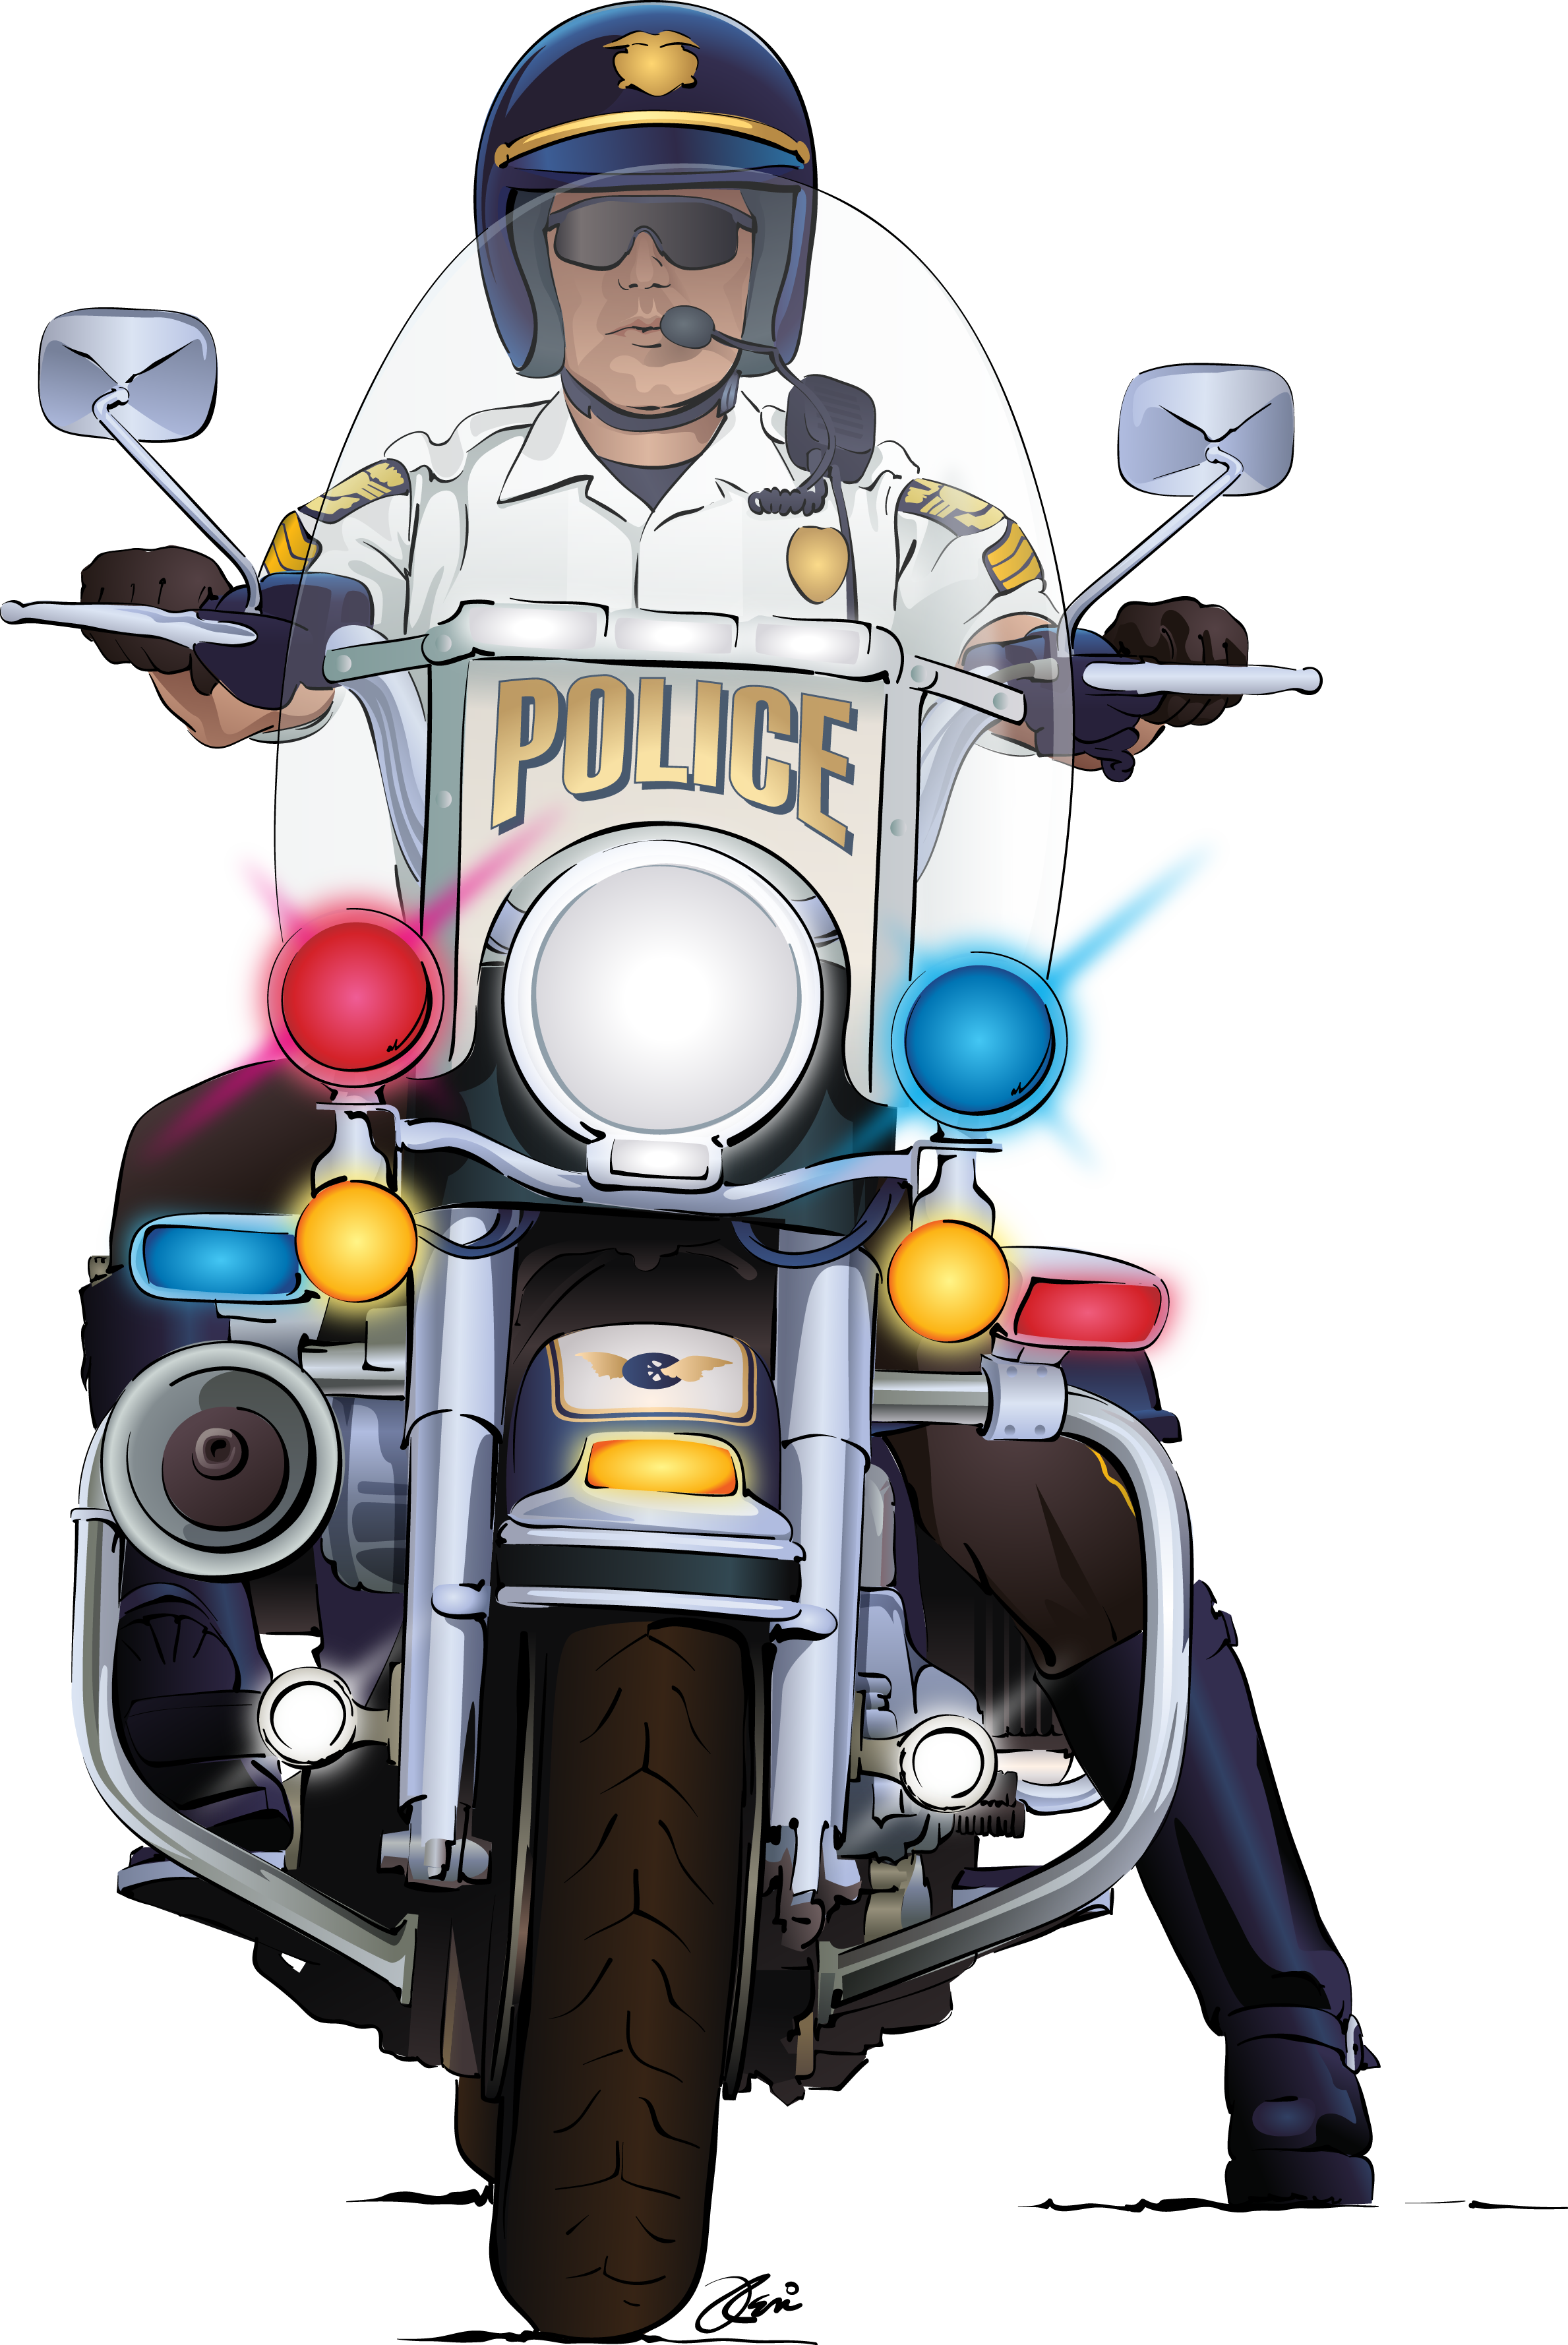 cop clipart motorcycle cop